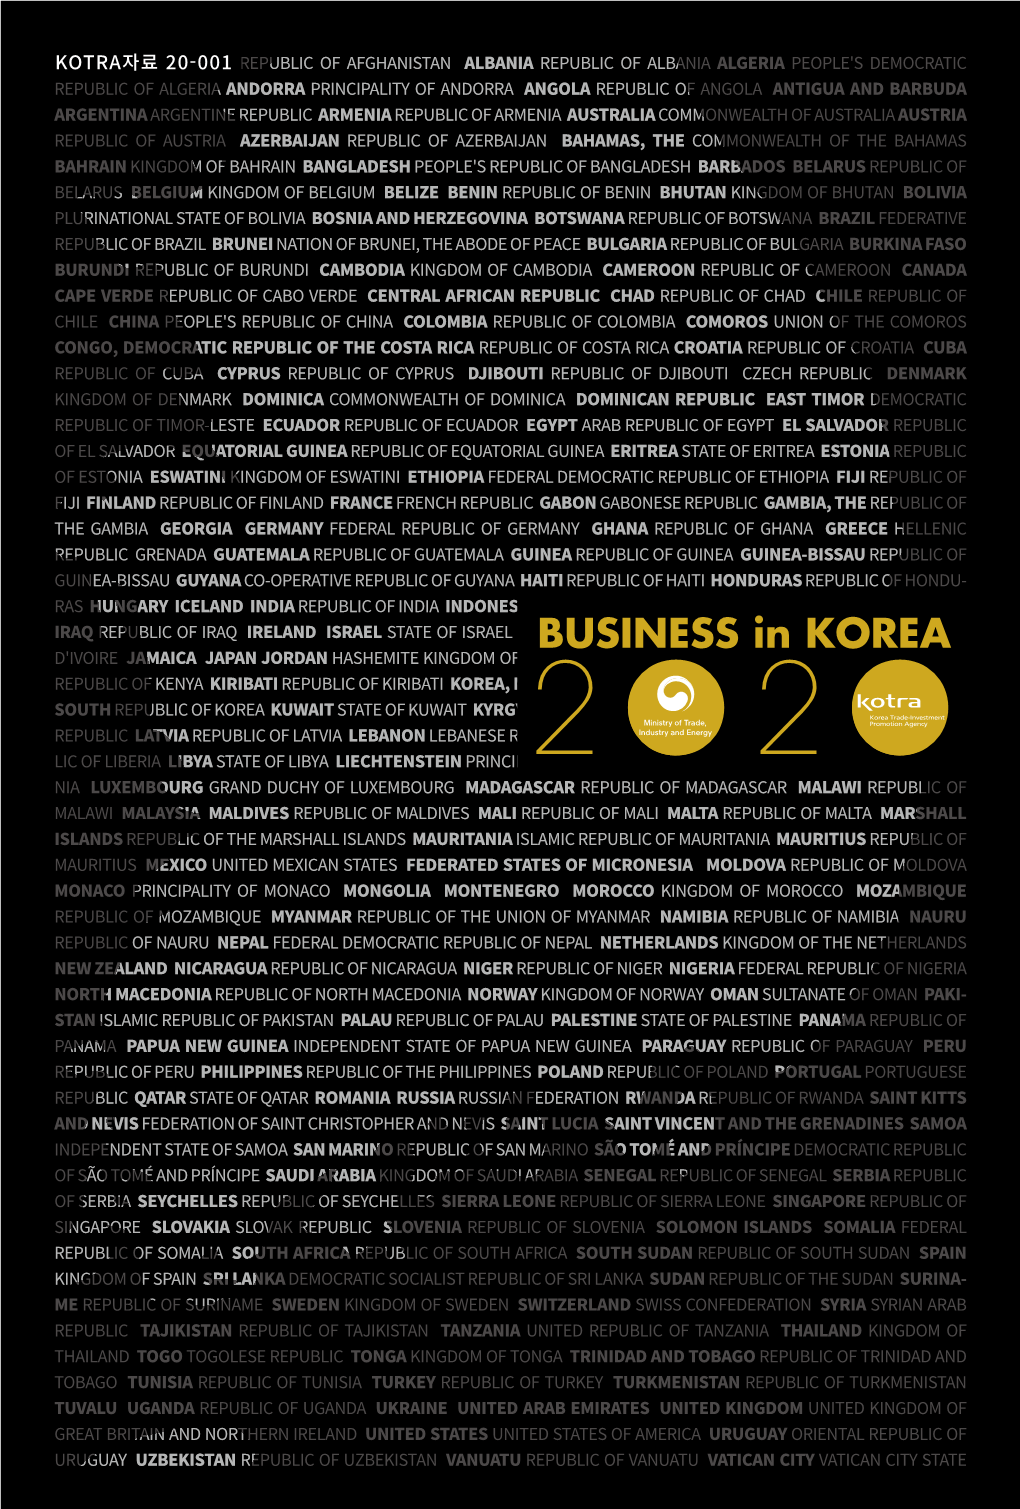 BUSINESS in KOREA